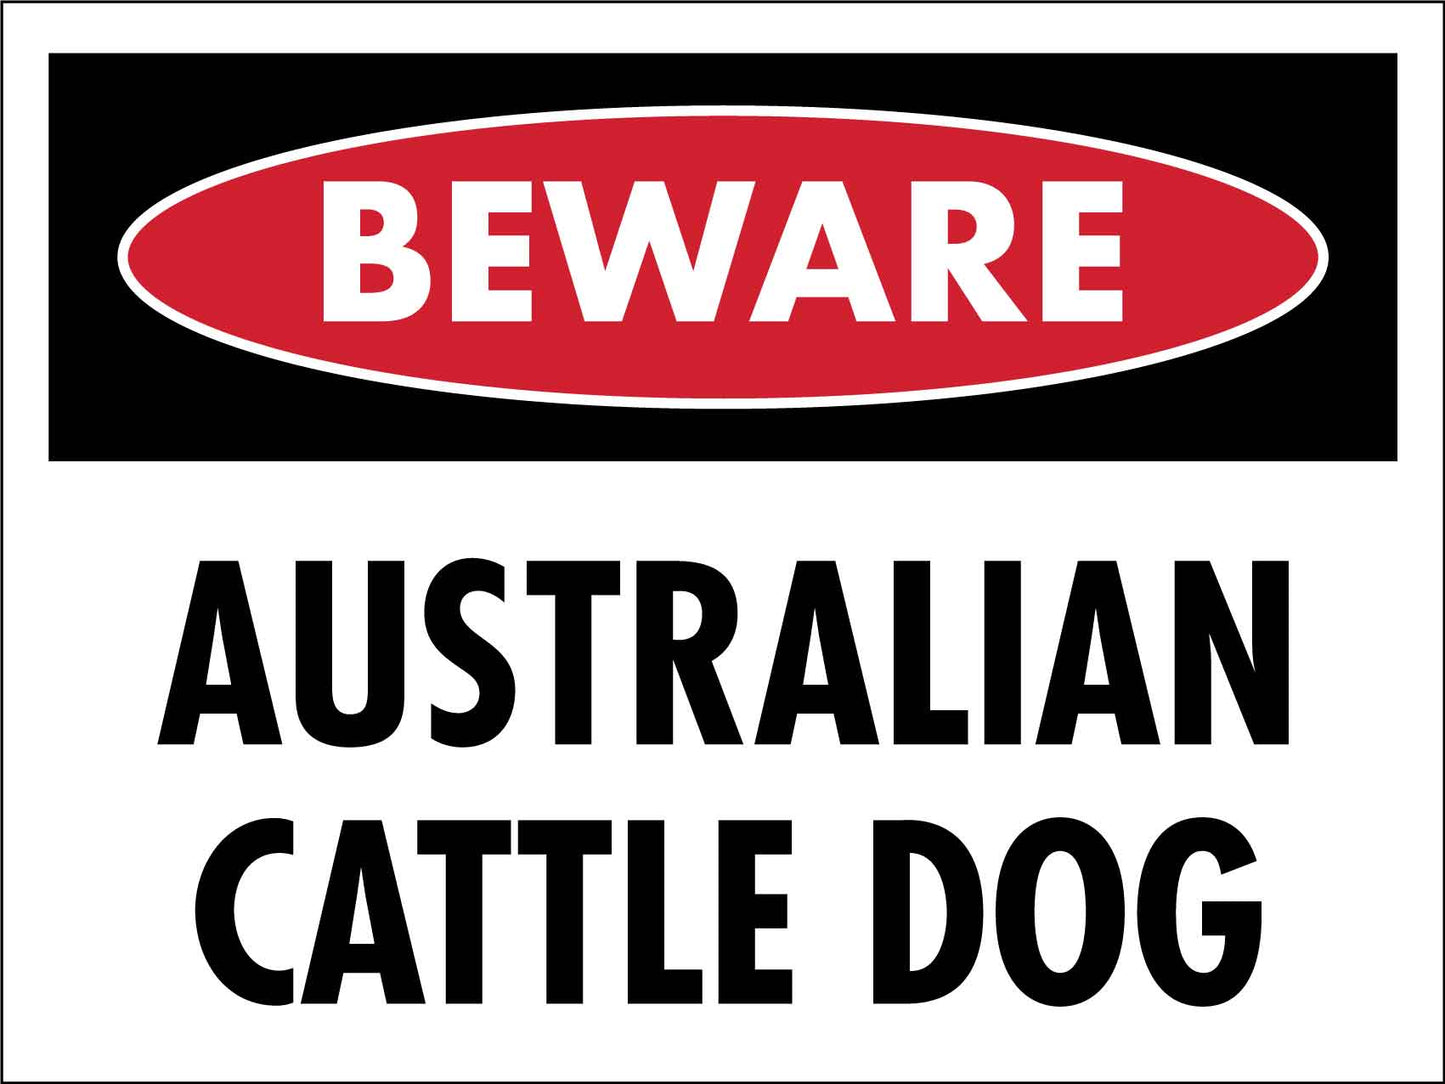 Beware of Australian Cattle Dog Sign